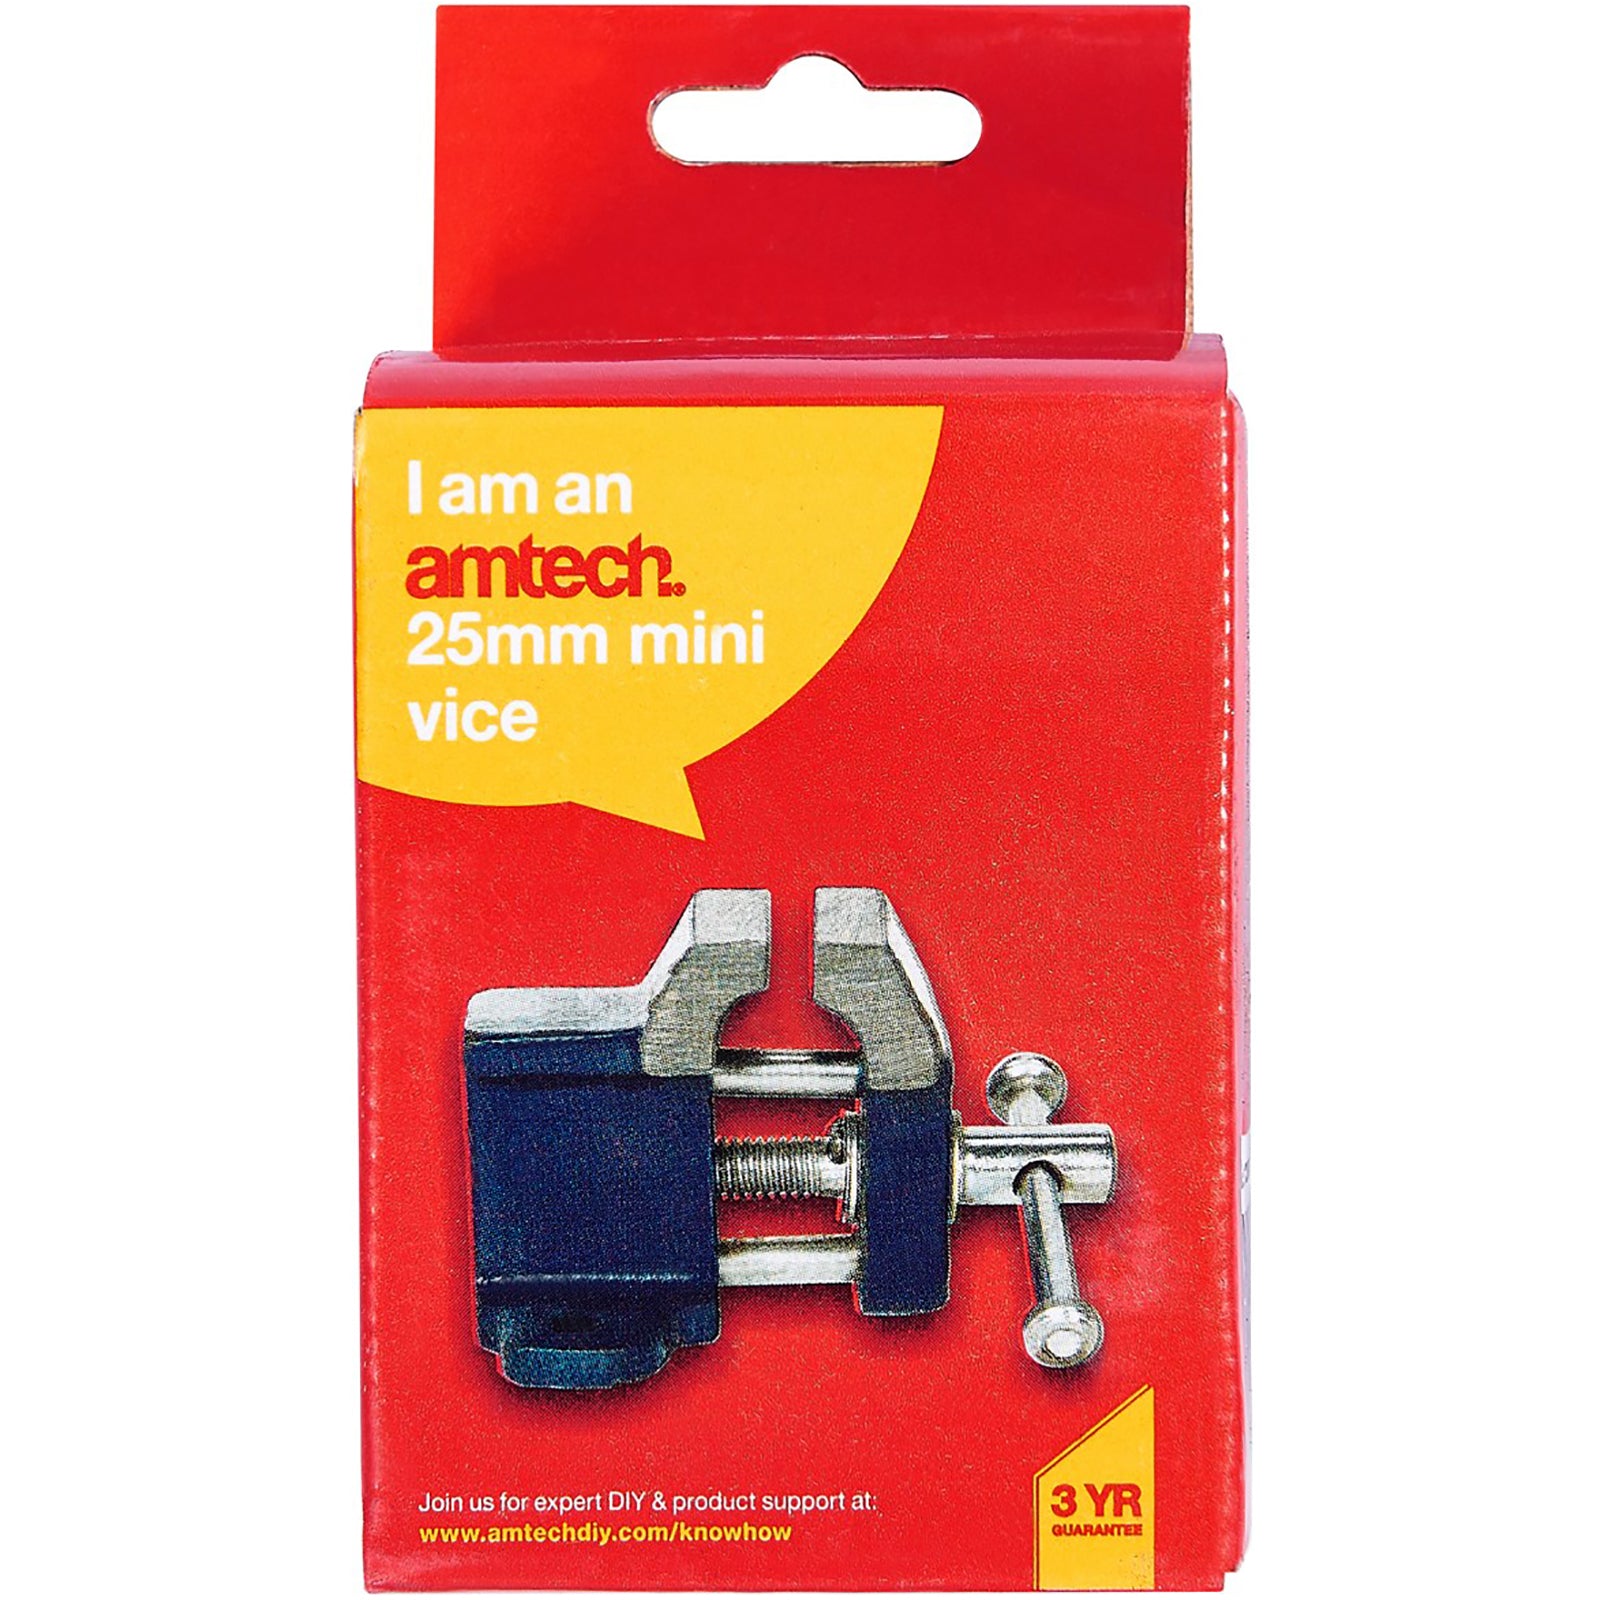 Amtech 25mm Cast Iron Mini Baby Vice